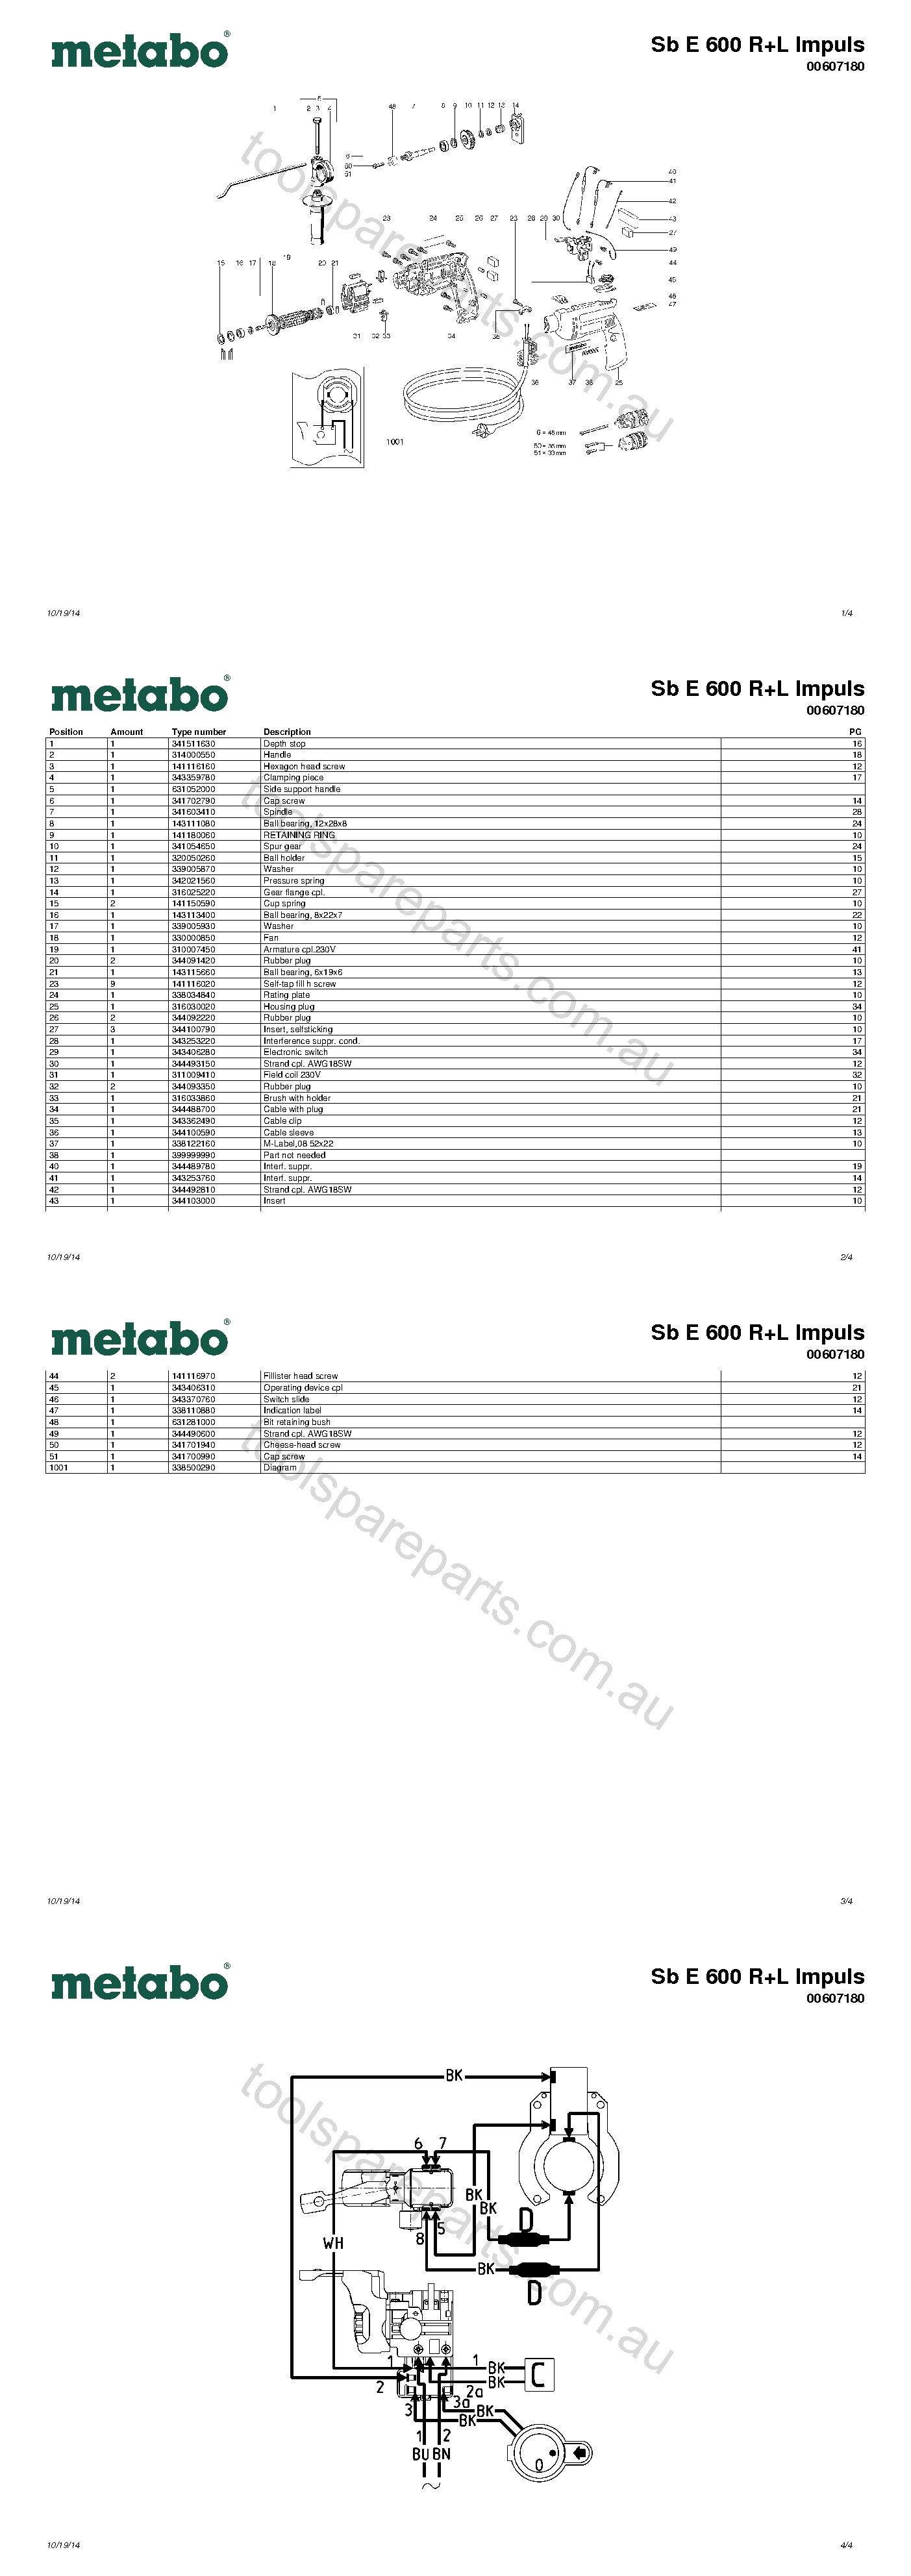 Metabo Sb E 600 R+L Impuls 00607180  Diagram 1